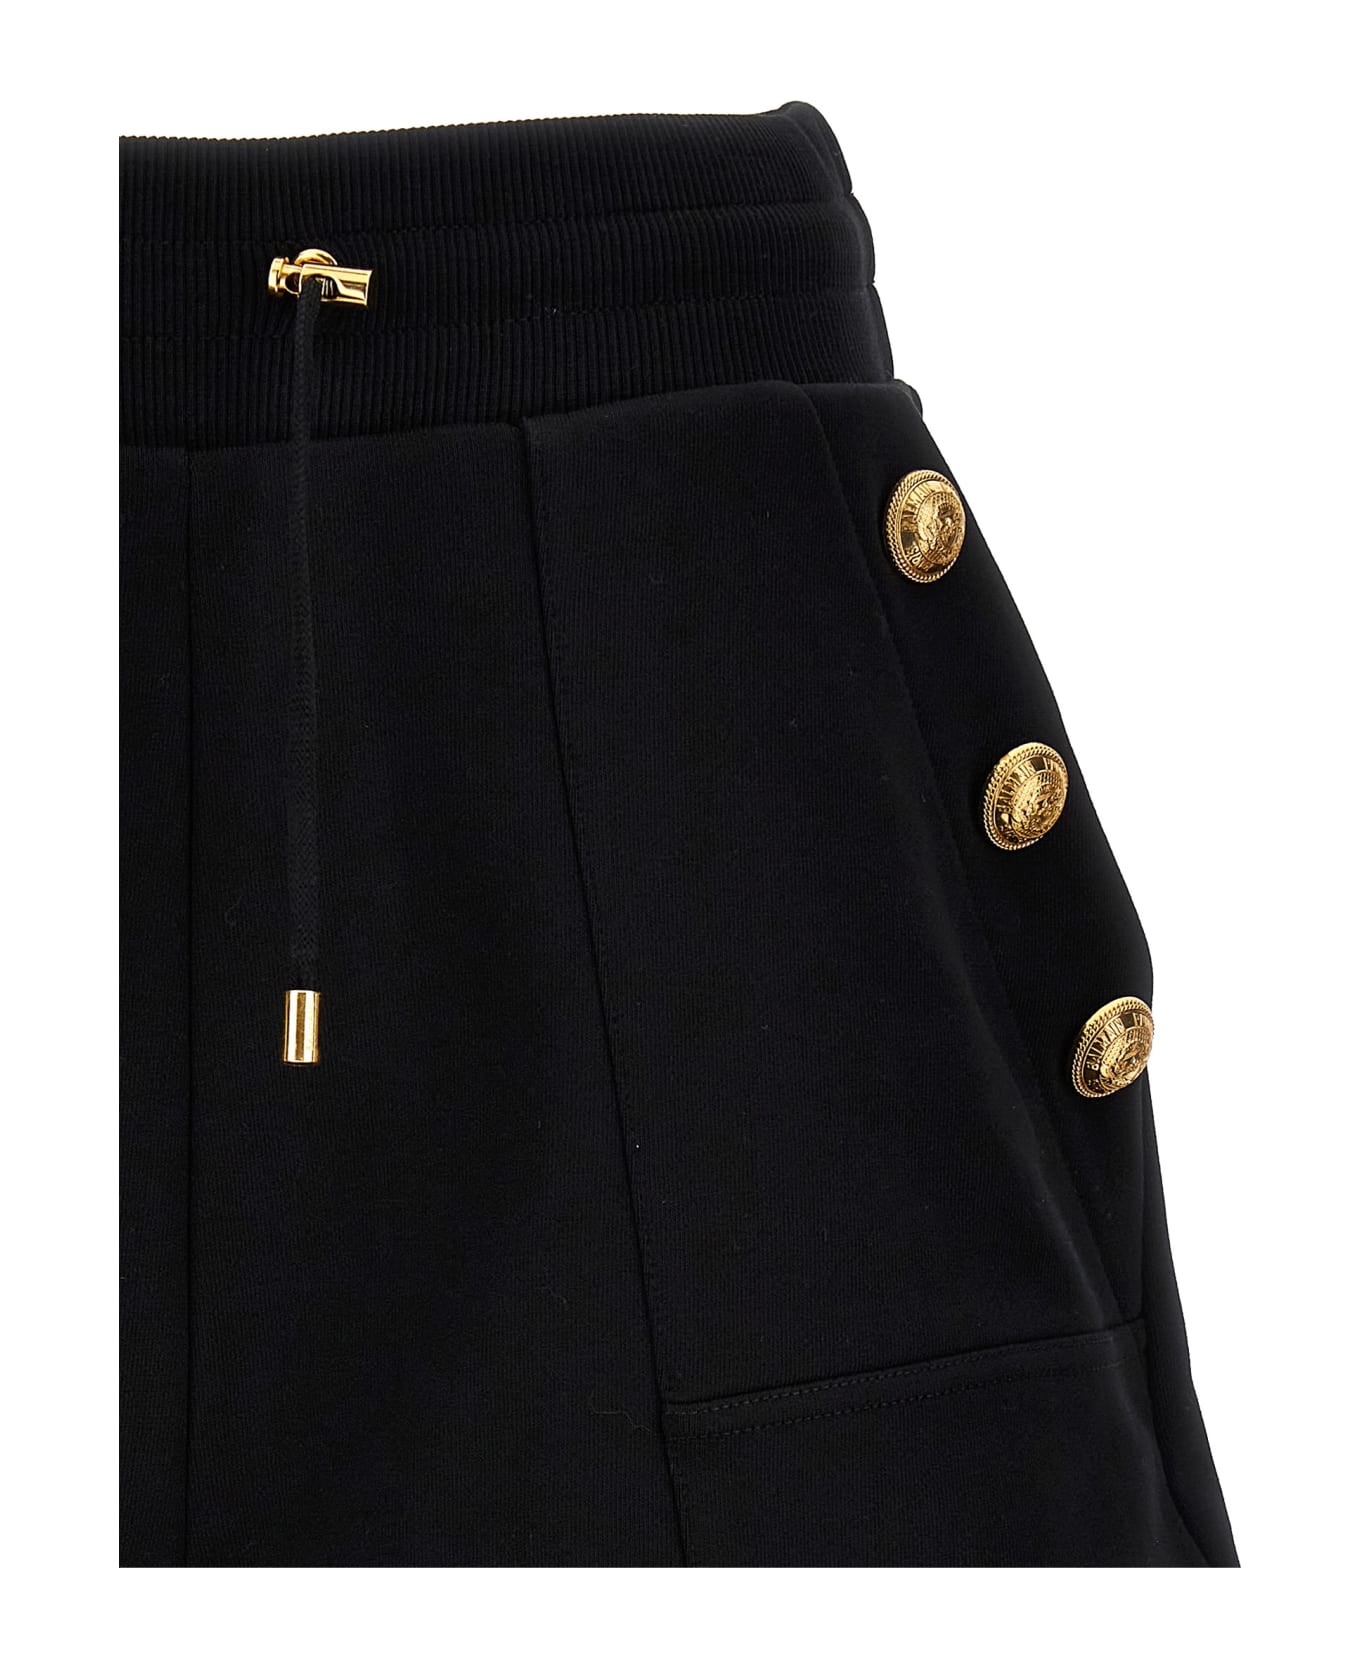 Balmain Six-button Shorts - Black